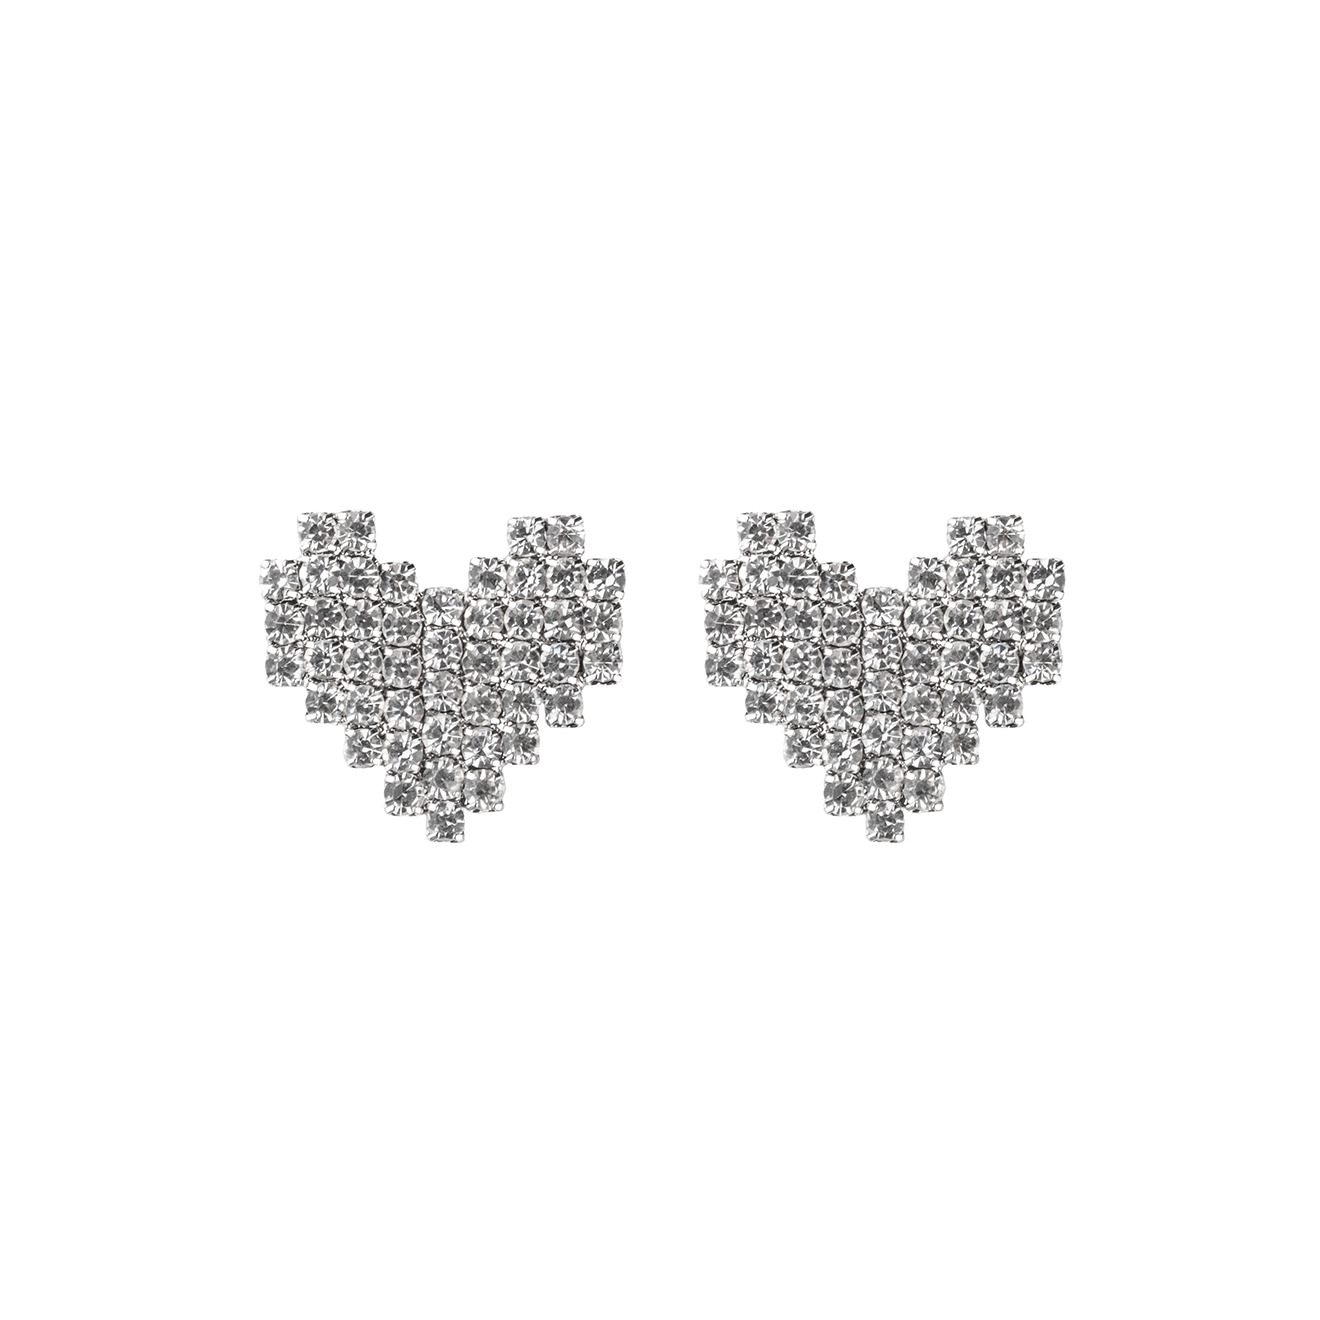 Herald Percy Серебристые серьги-сердца из кристаллов